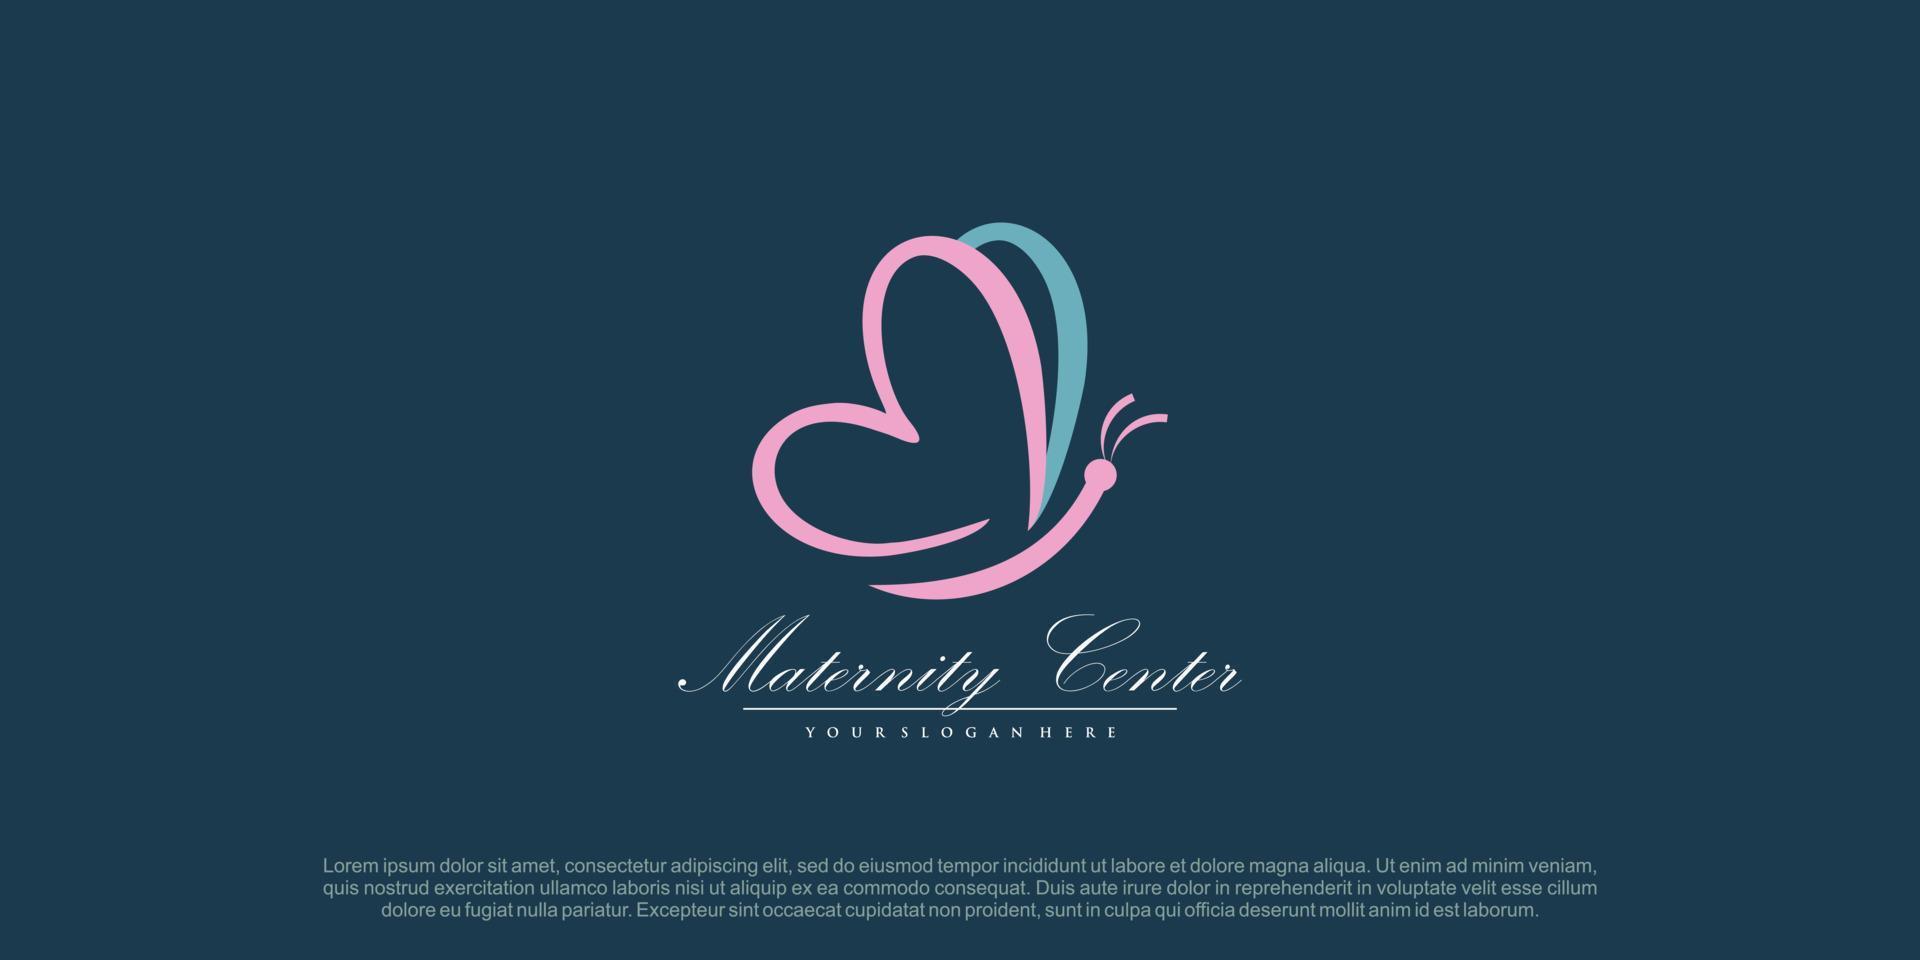 vetor de design de logotipo de borboleta para estilo de maternidade com conceito criativo exclusivo